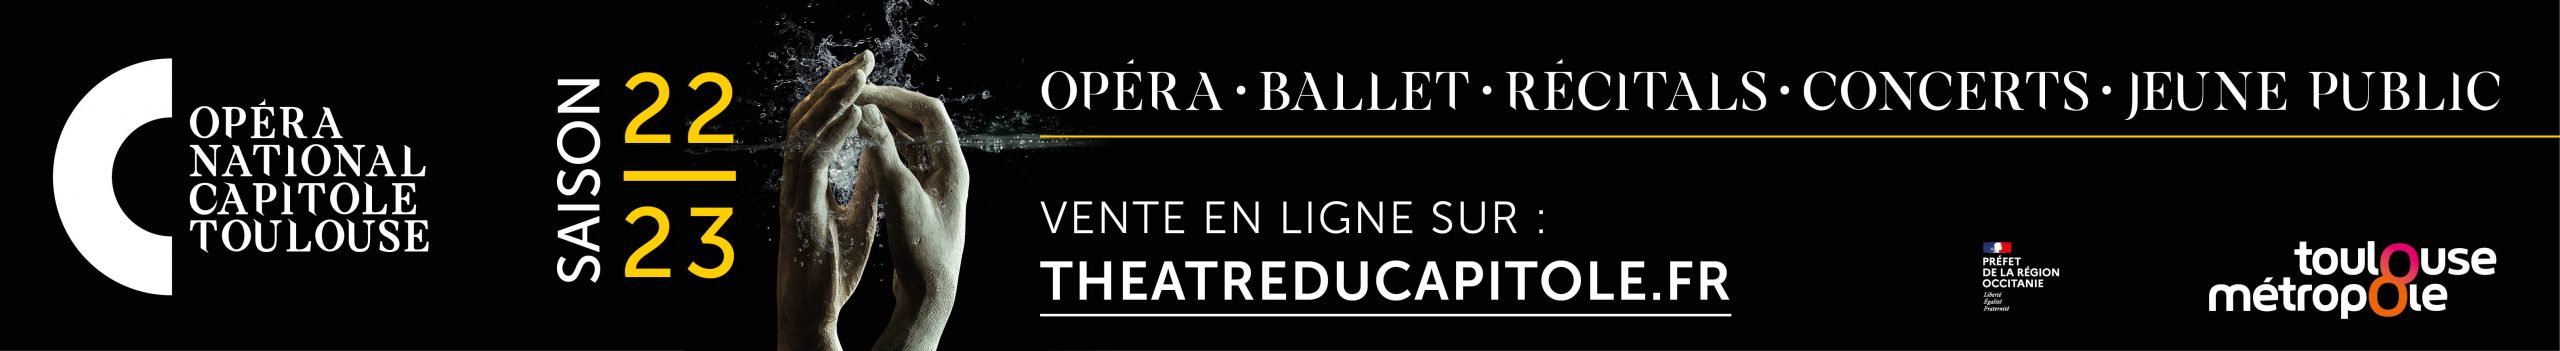 Bilhetes Online Opéra Du Capitole 22:23